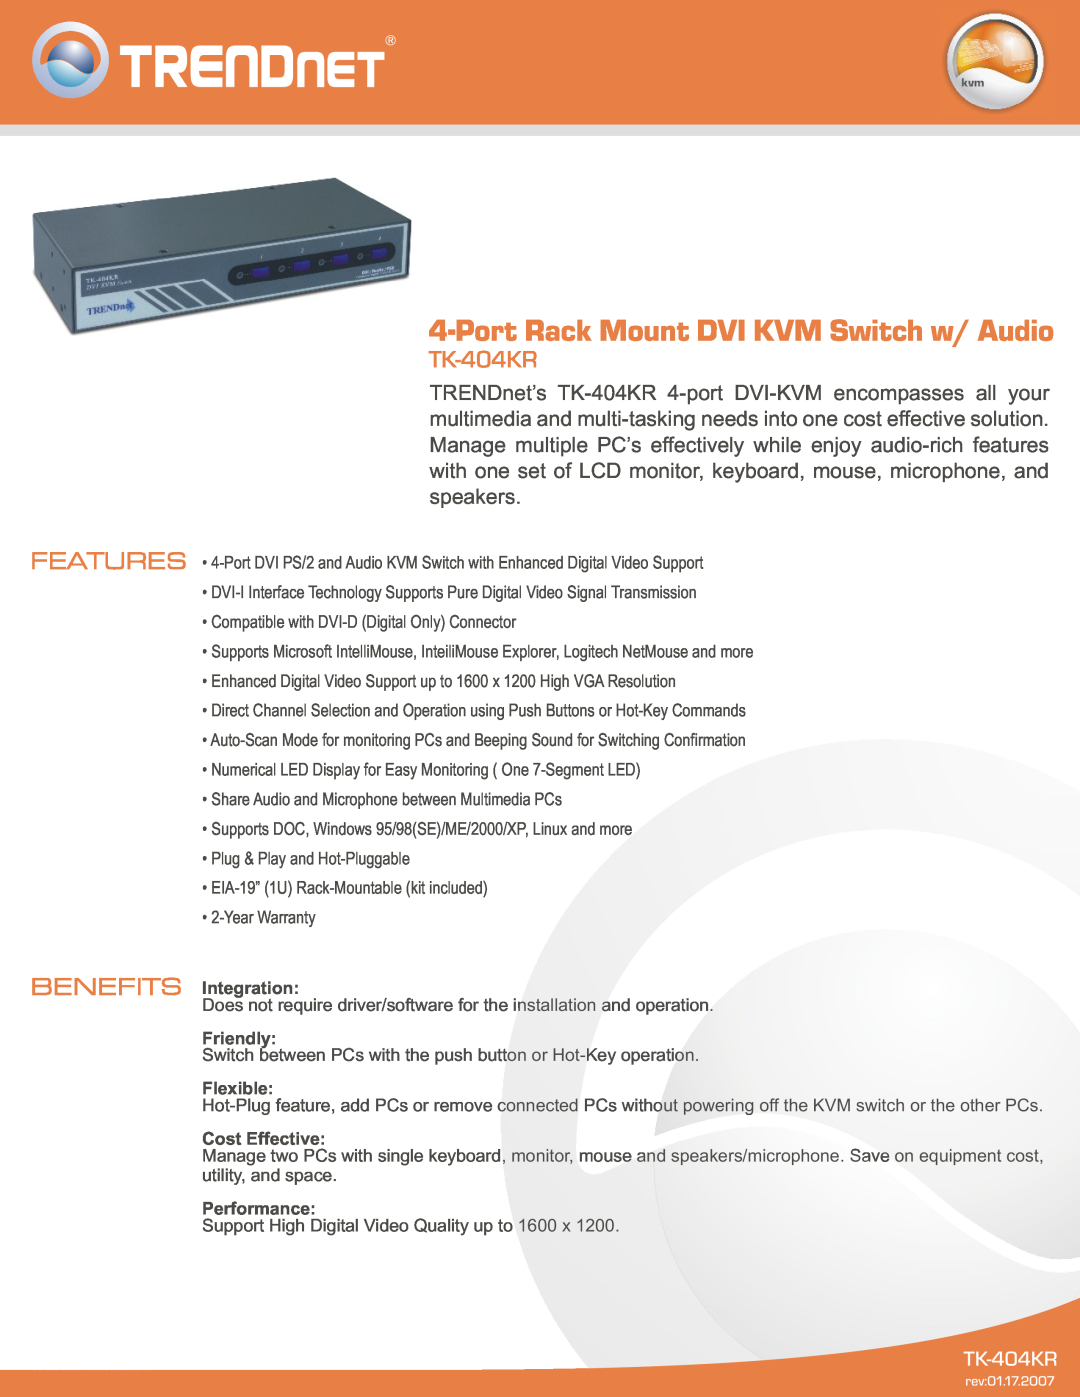 TRENDnet TK-404KR warranty Port Rack Mount DVI KVM Switch w/ Audio, BENEFITS Integration, Friendly, Flexible, Performance 